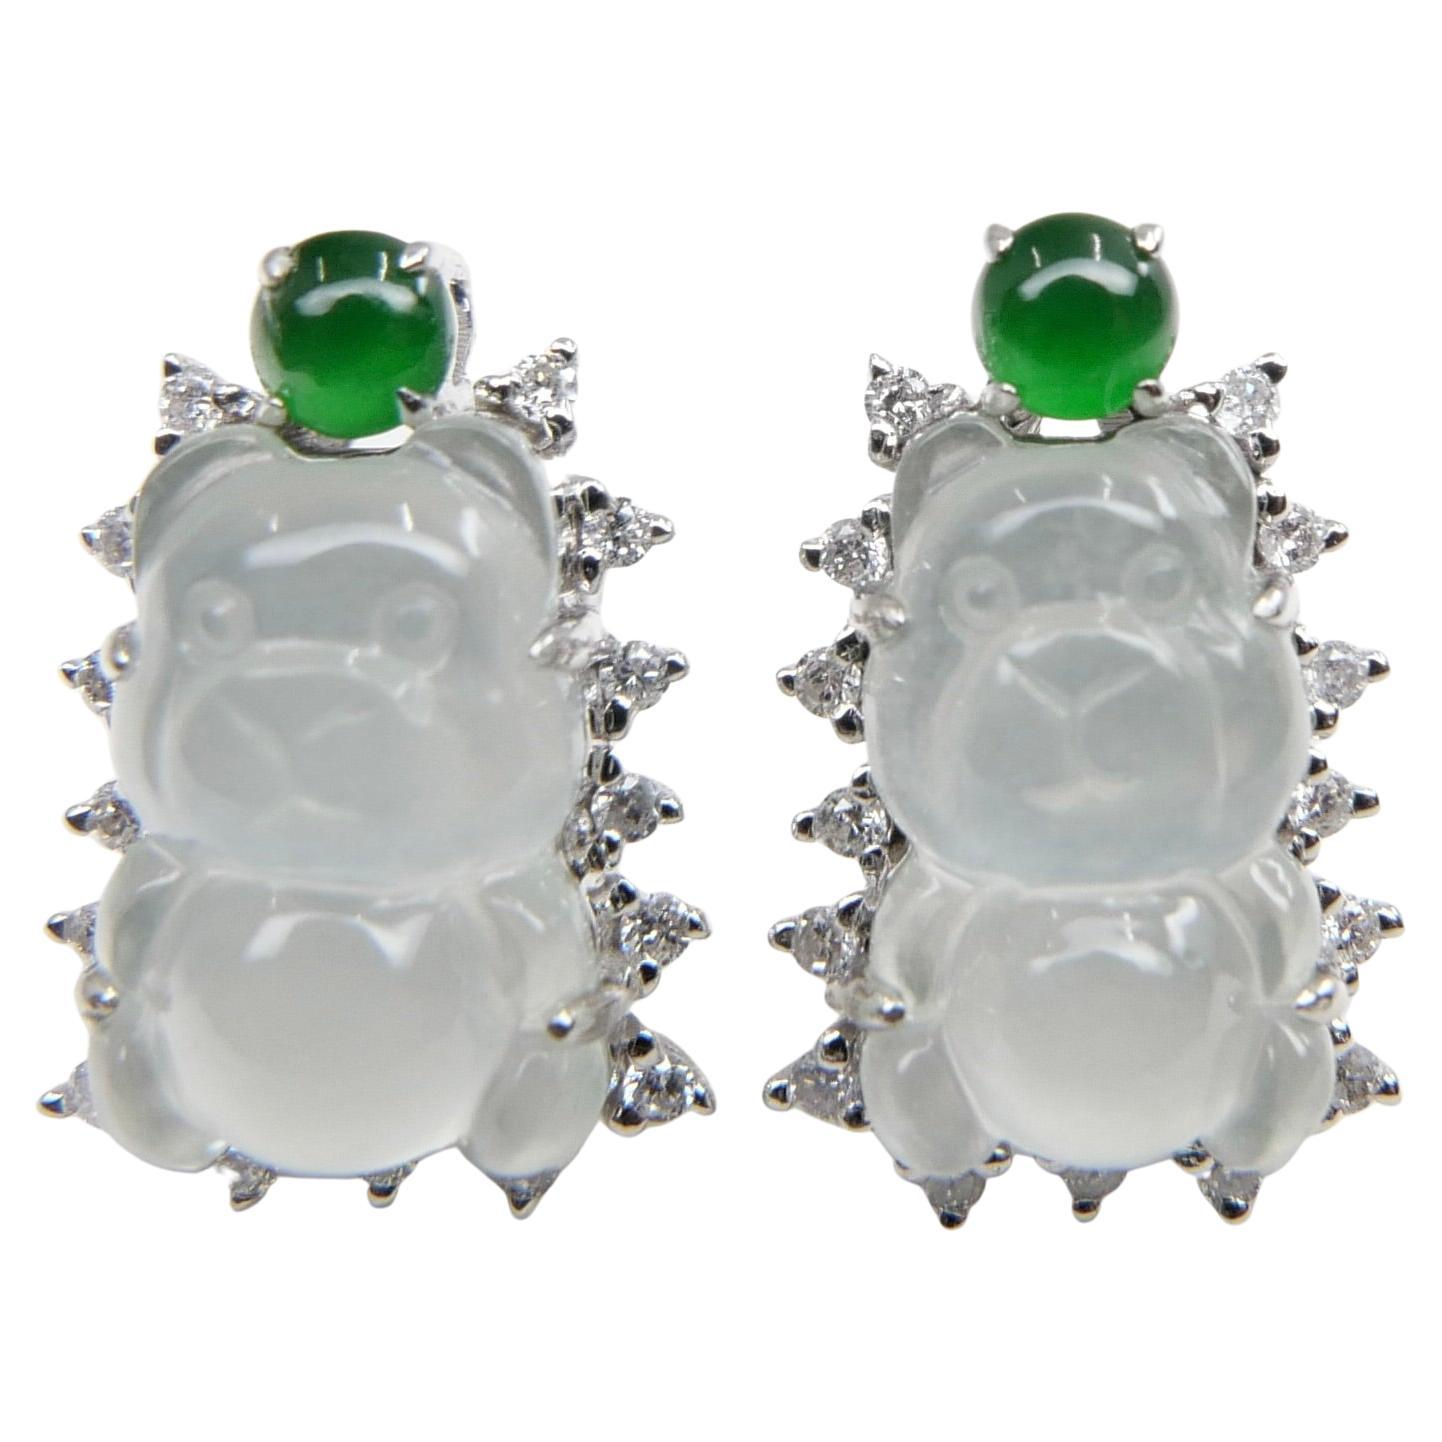 Certified Imperial & Icy Jade Diamond Gummy Bear Earrings, Great for Kids! For Sale